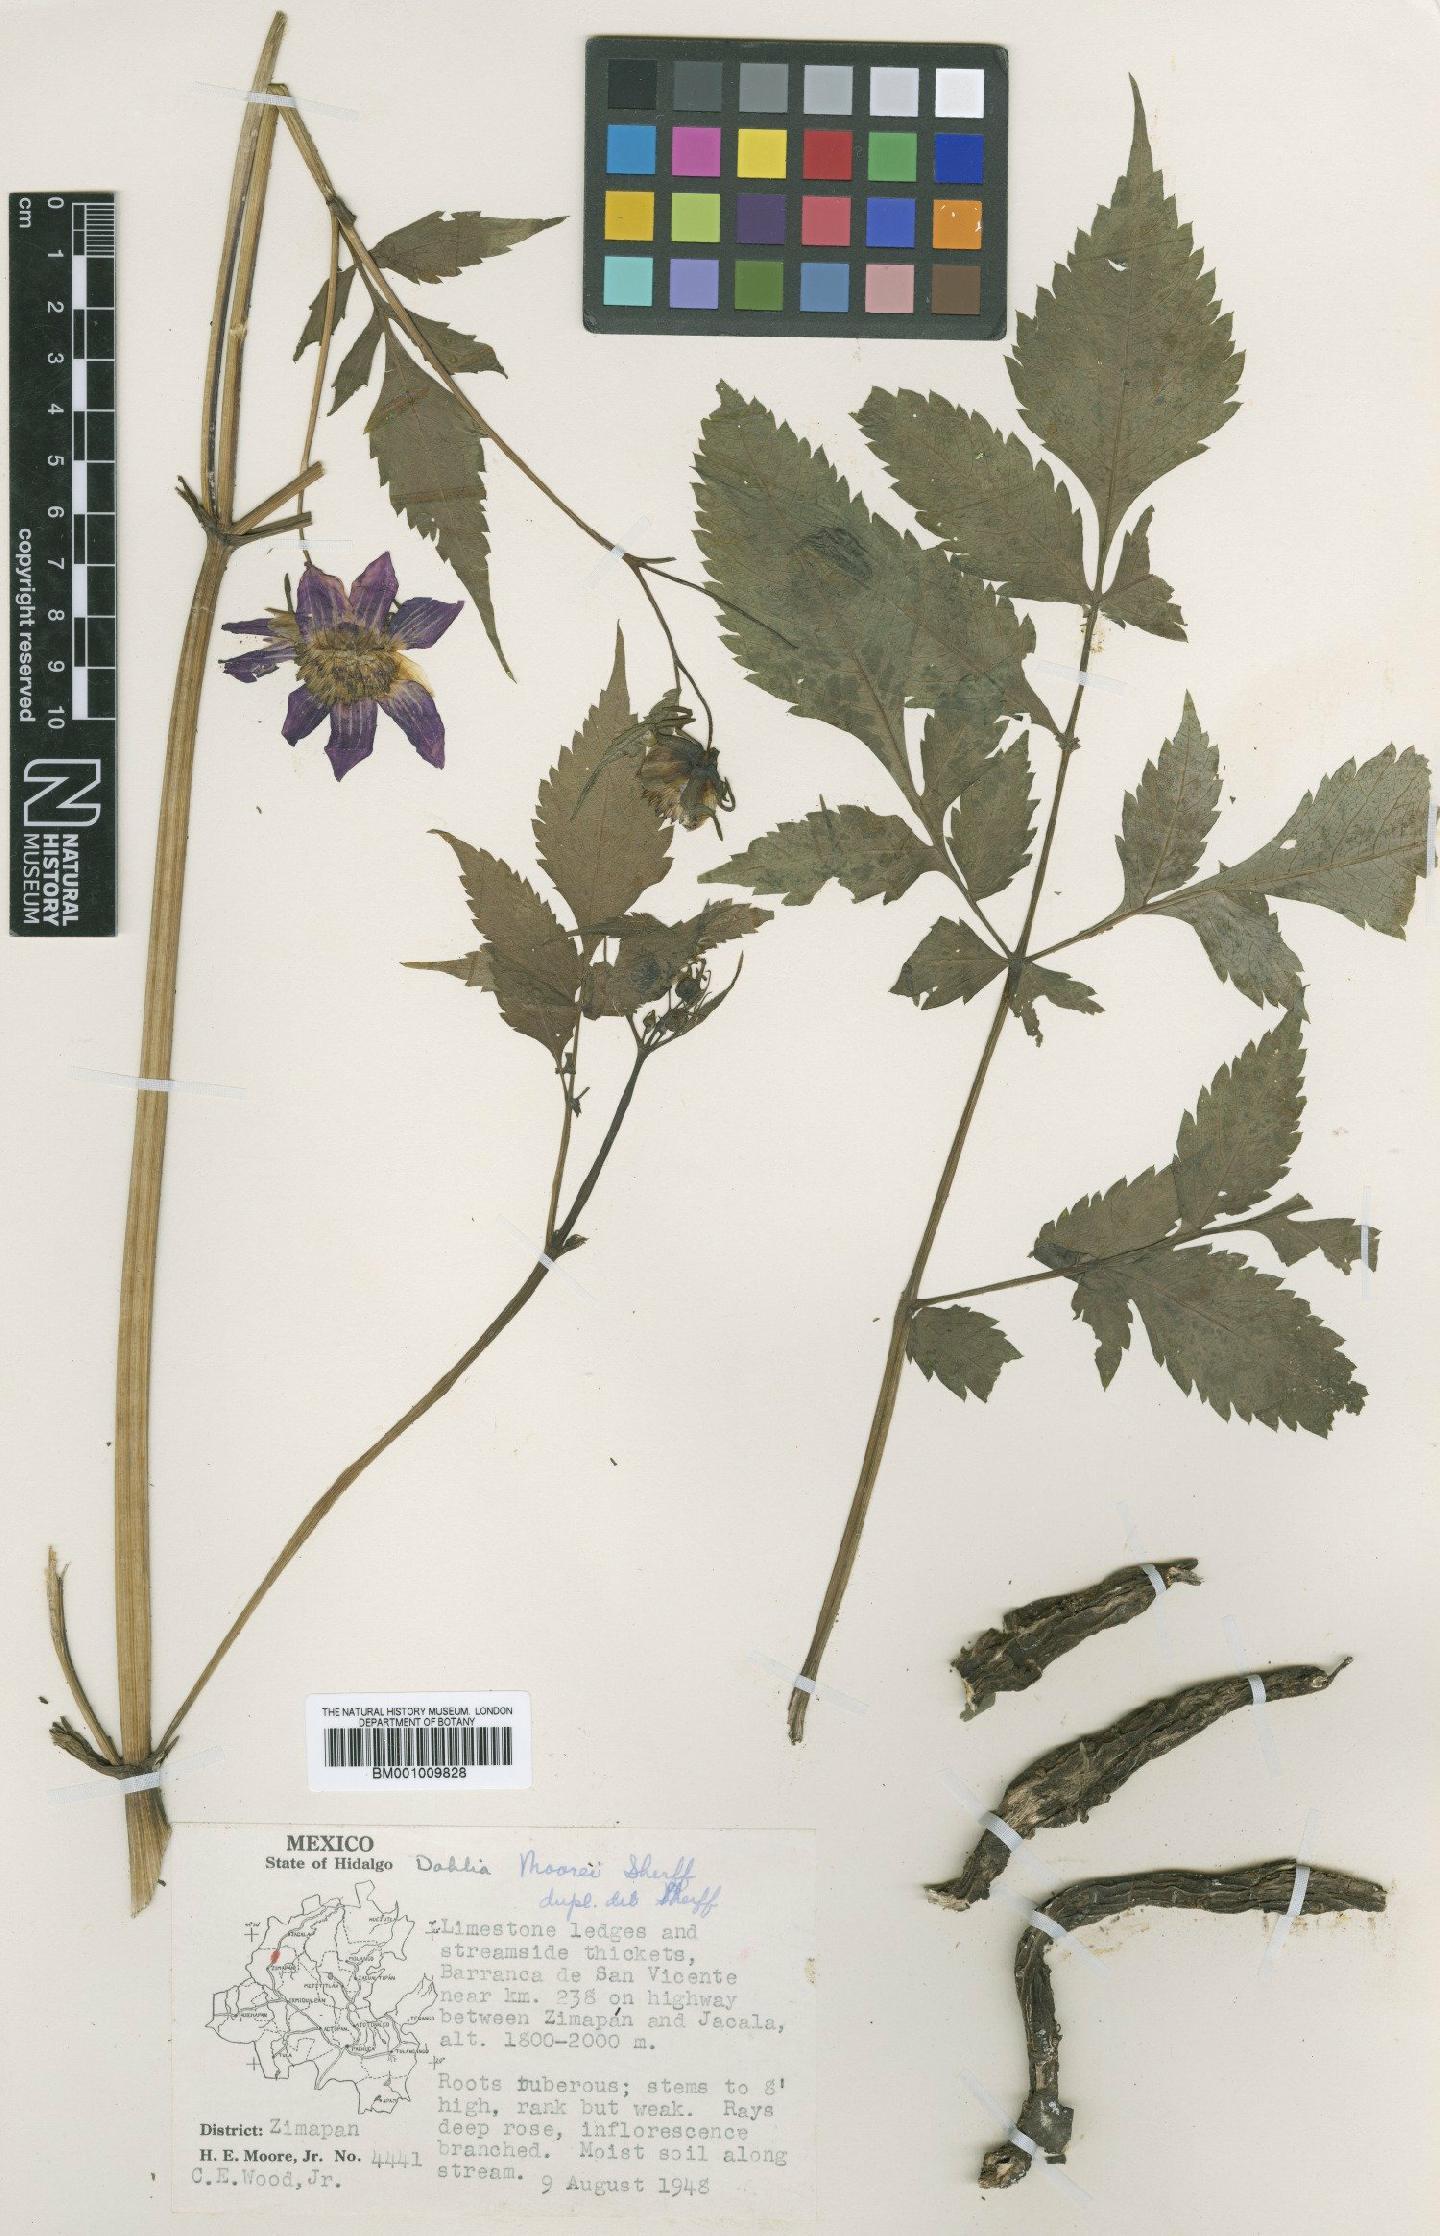 To NHMUK collection (Dahlia moorei Sherff; Isotype; NHMUK:ecatalogue:622345)